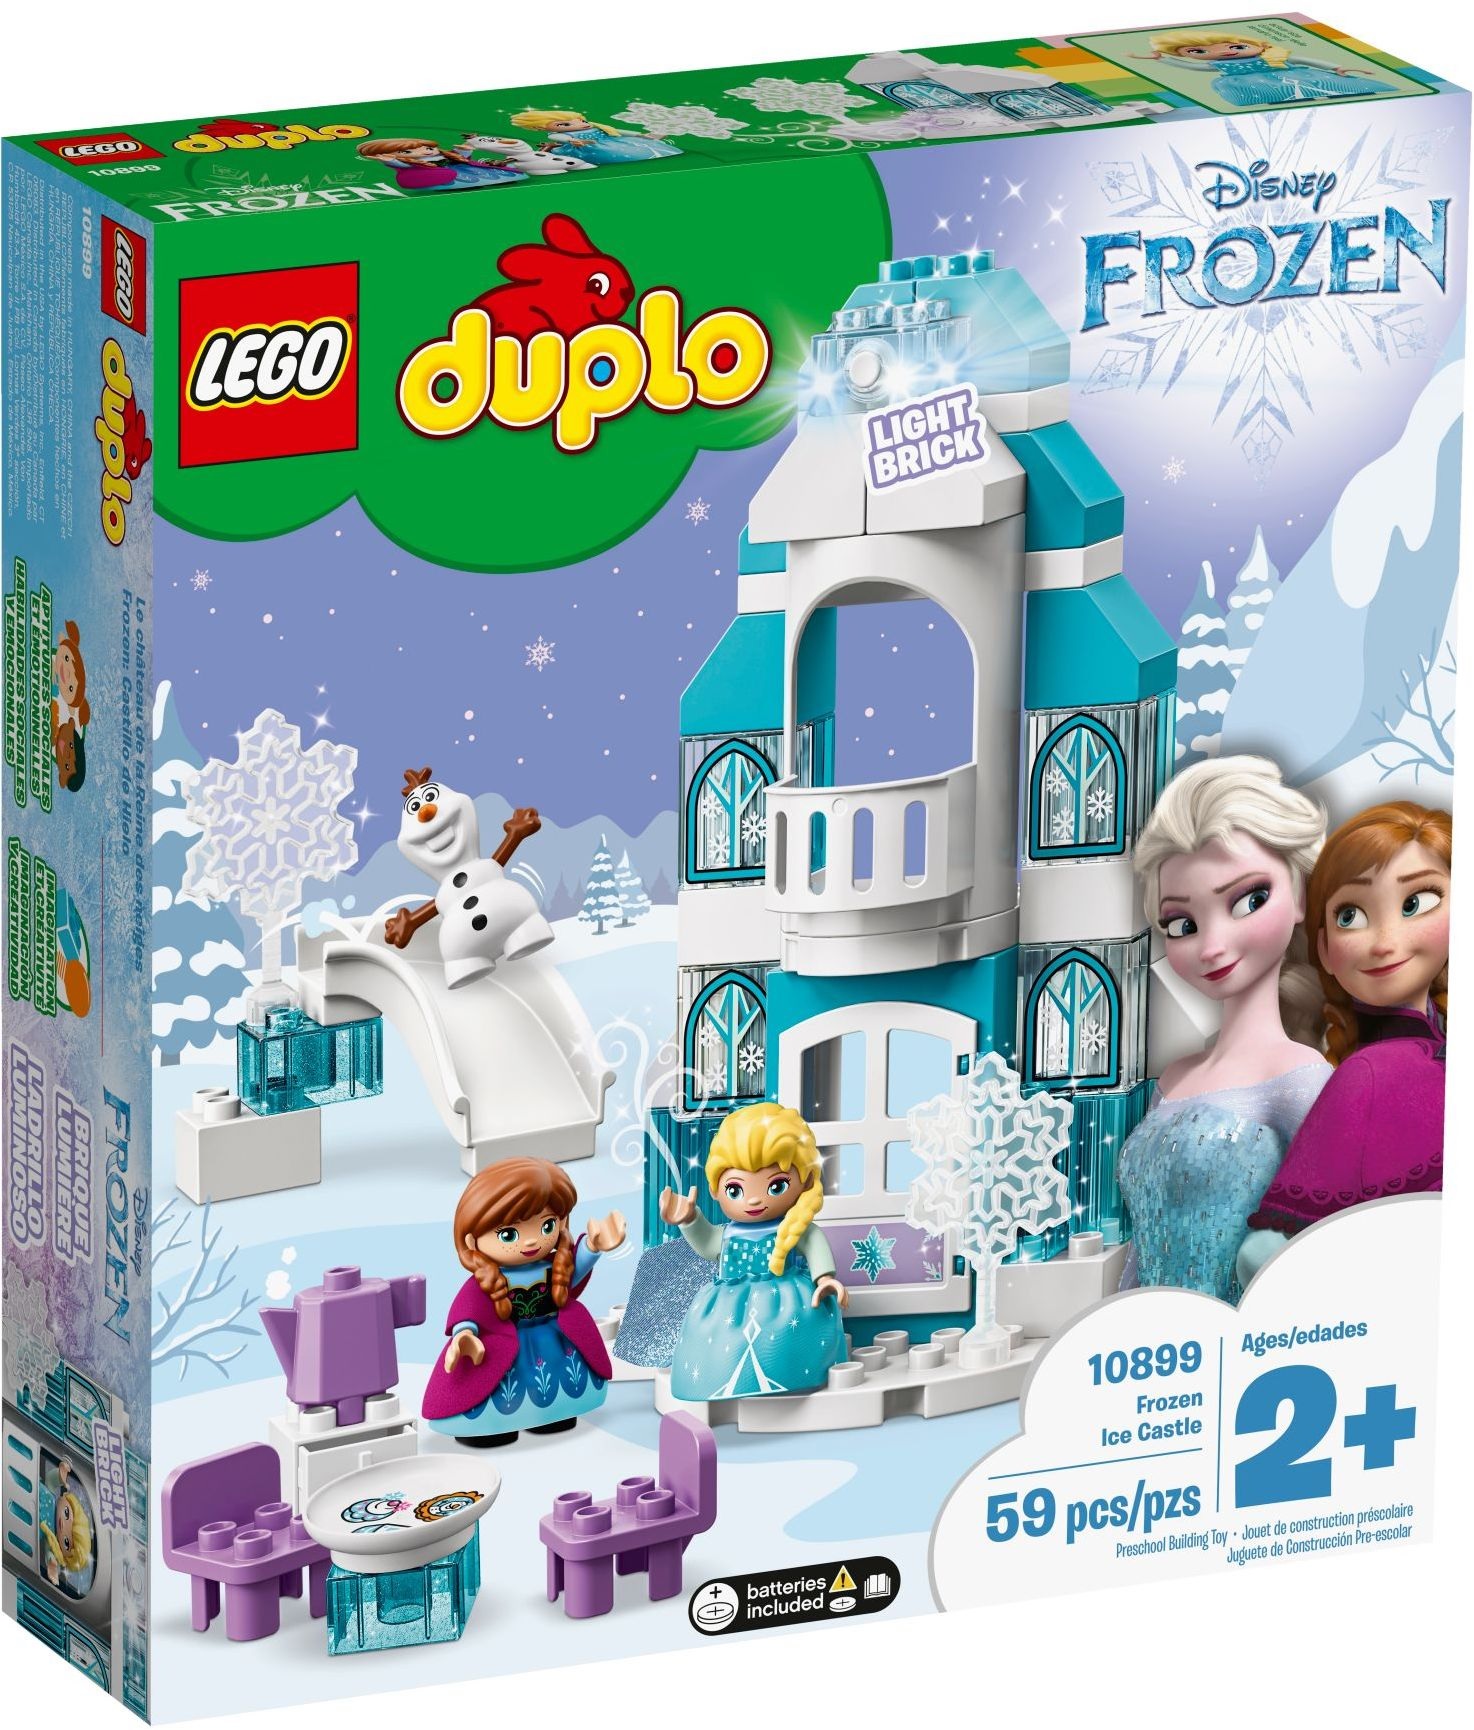 LEGO DUPLO 10899 Disney Frozen Zamek z Krainy lodu